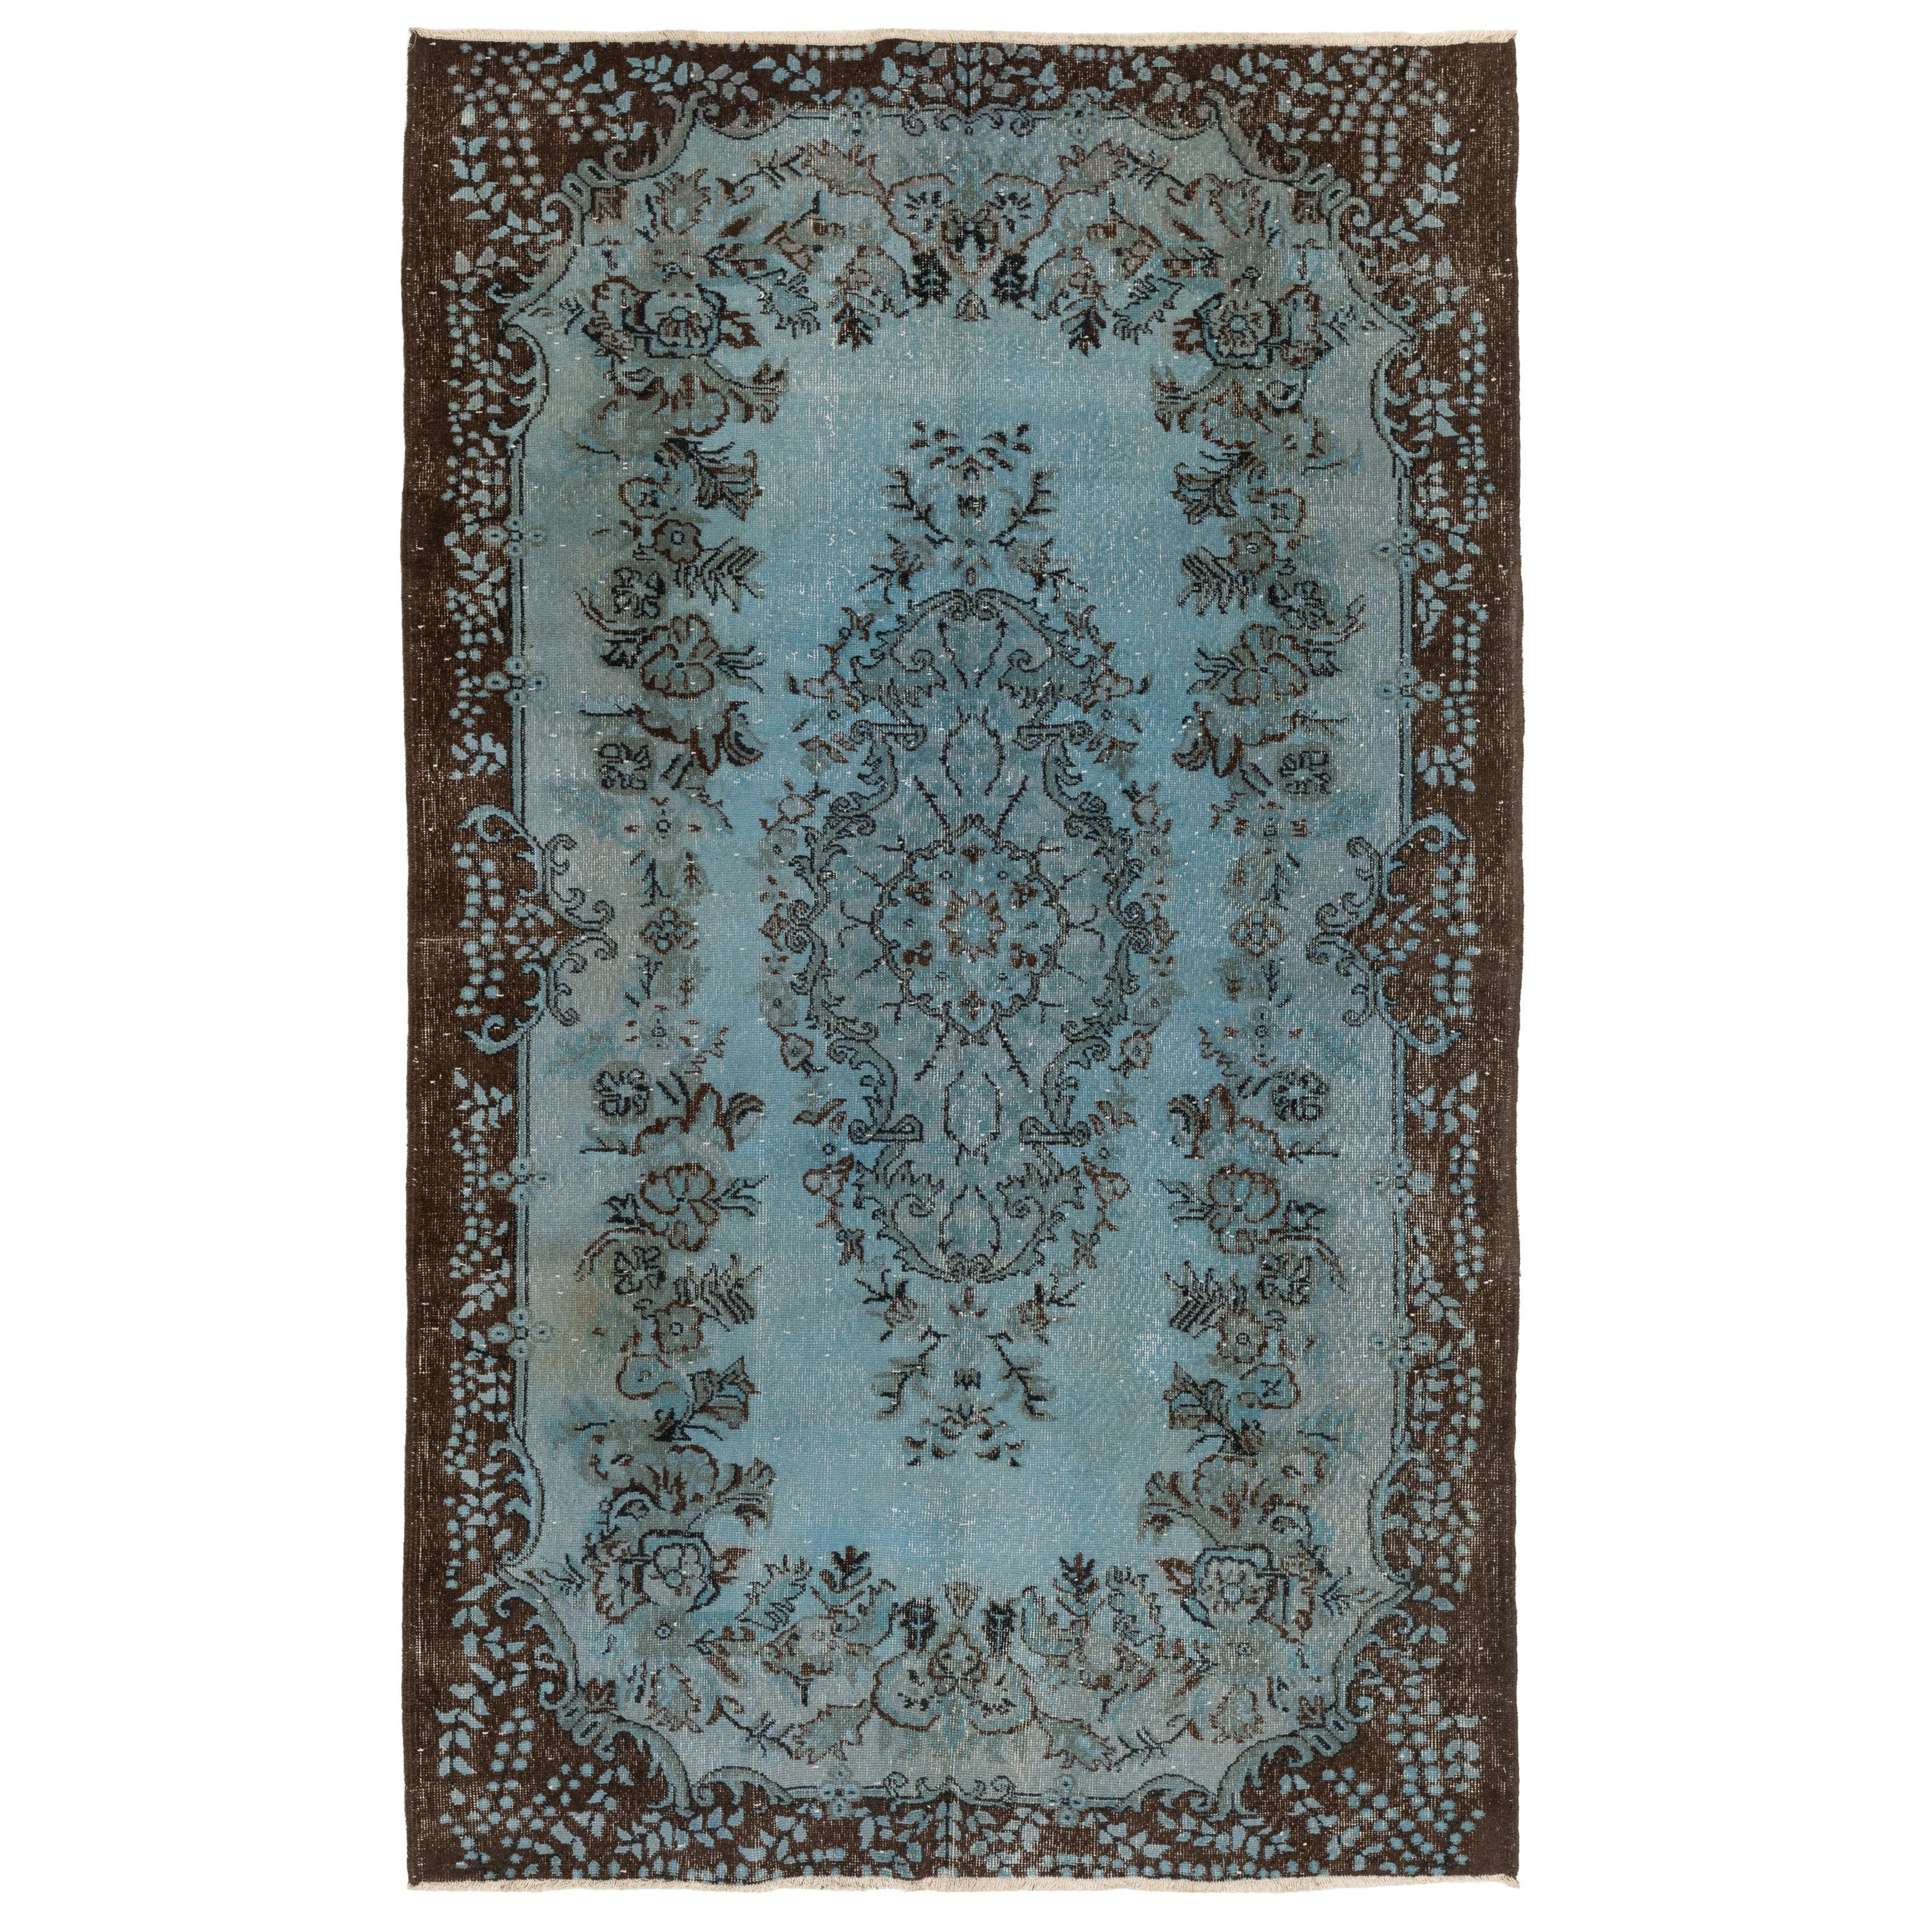 6x9.2 Ft Handmade Turkish Rug in Denim Blue, Contemporary Baroque Design Carpet For Sale